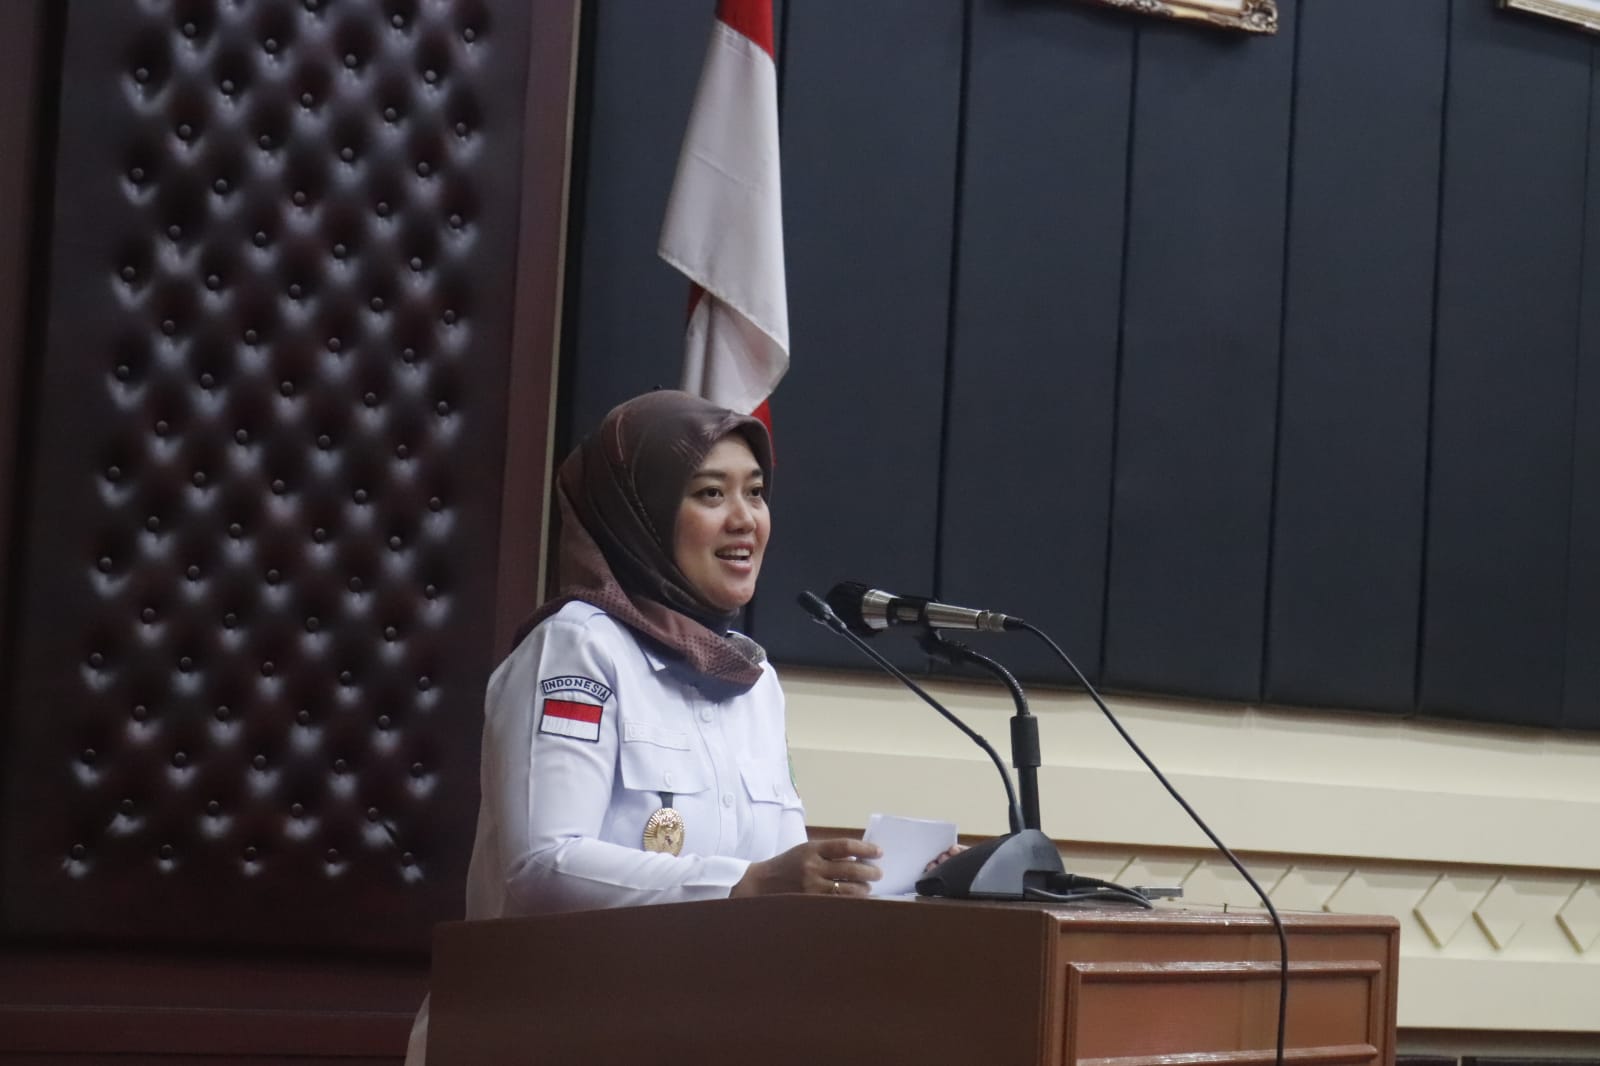 Begini Kata Wagub Nunik Soal Kritik Pada Pembangunan Lampung Yang Viral Di Tiktok